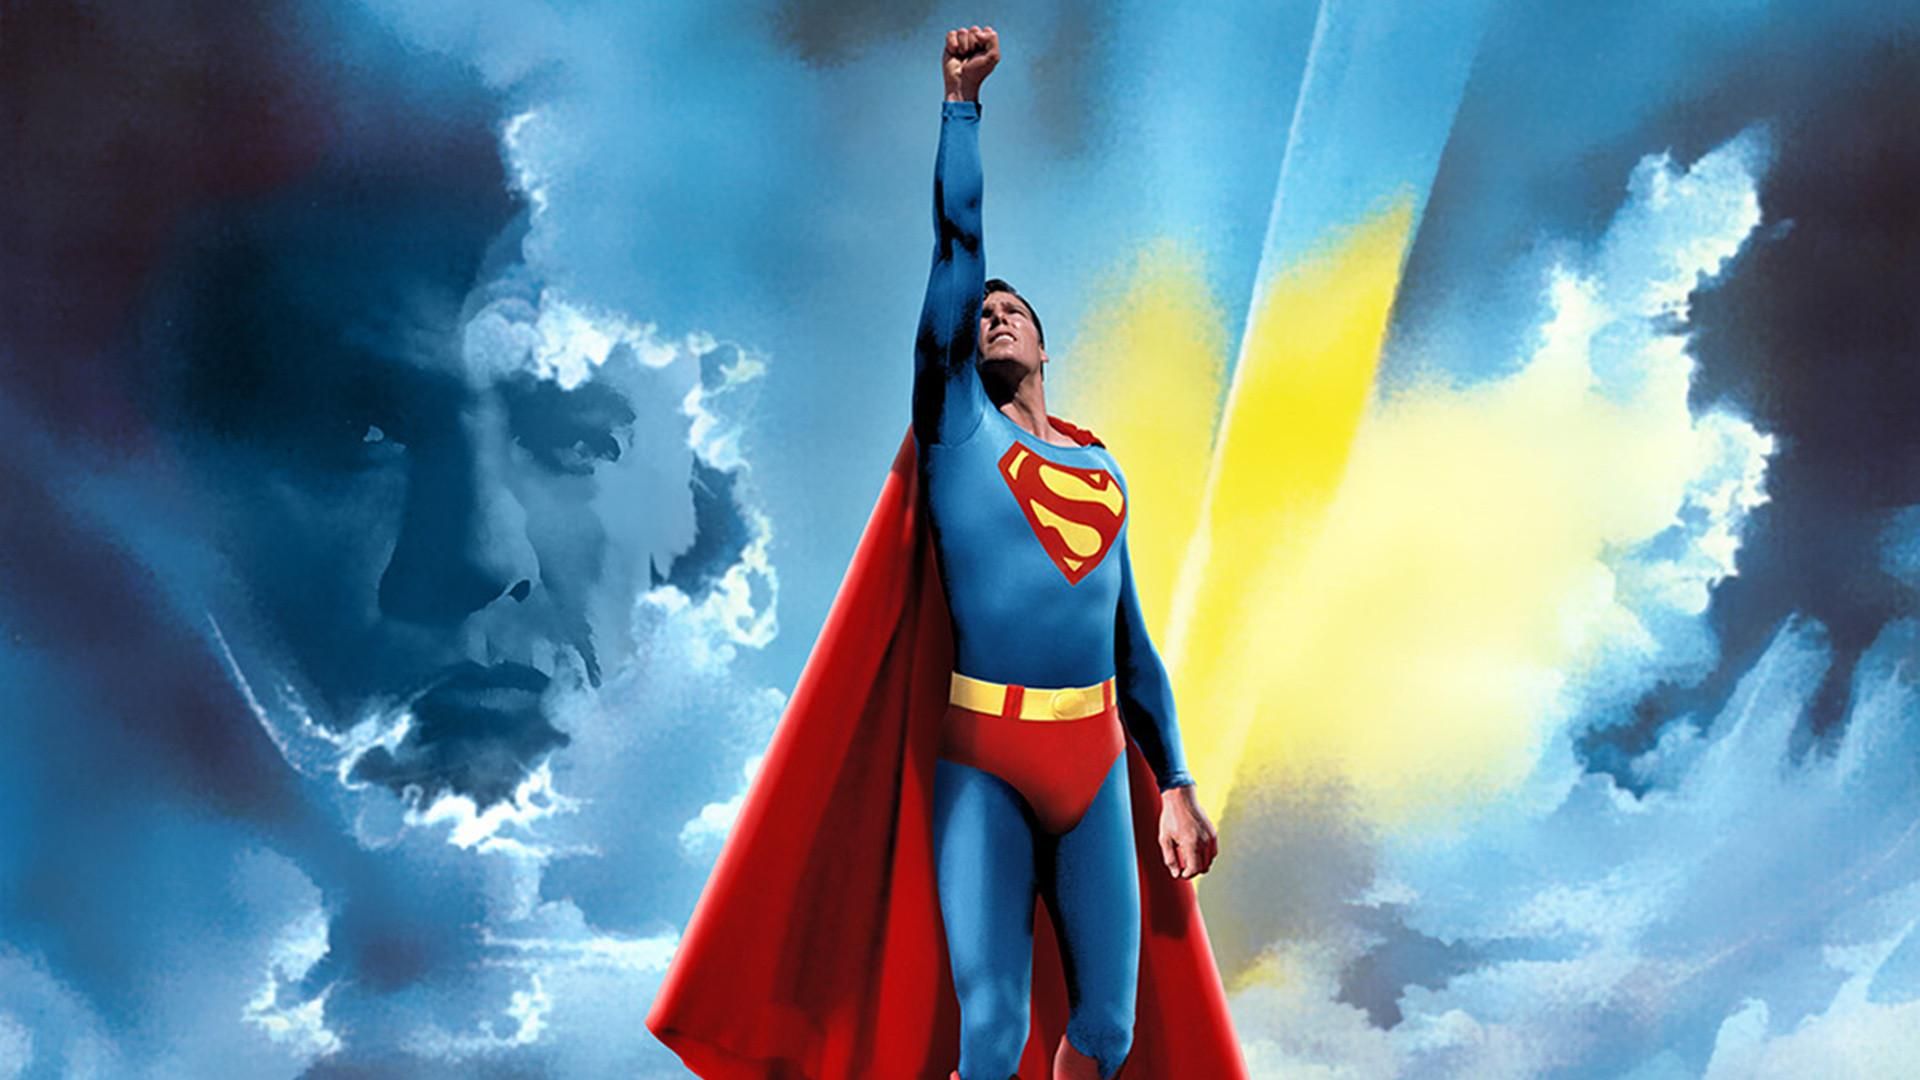 Superman background